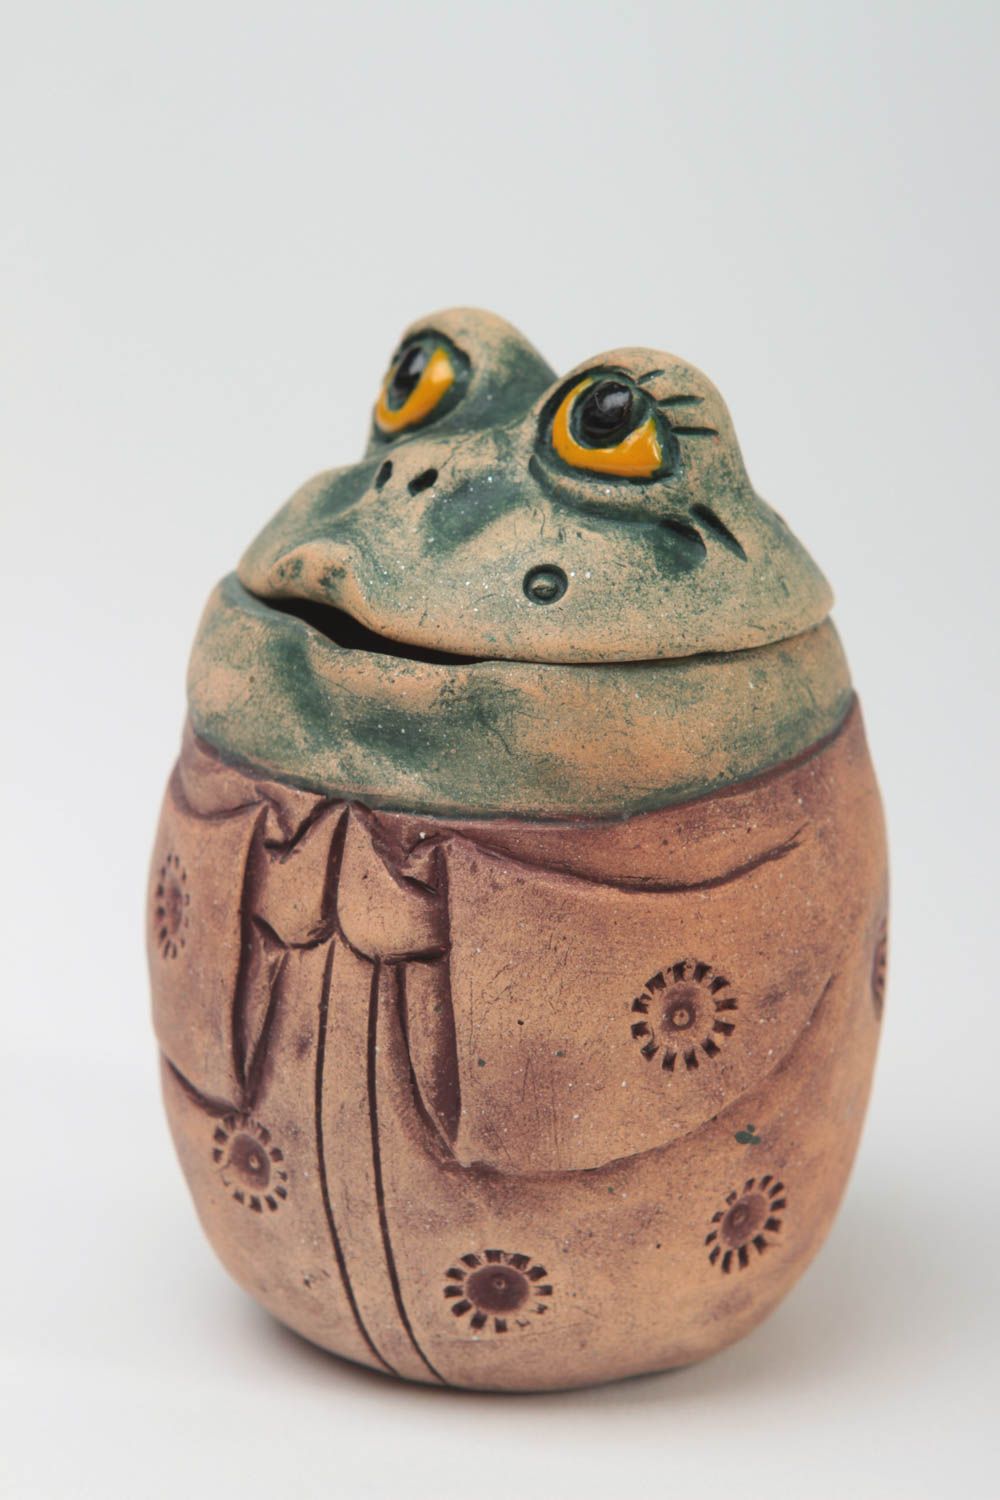 Шкатулка ручной работы в виде лягушки детская шкатулка эко-декор фигурка глина фото 2